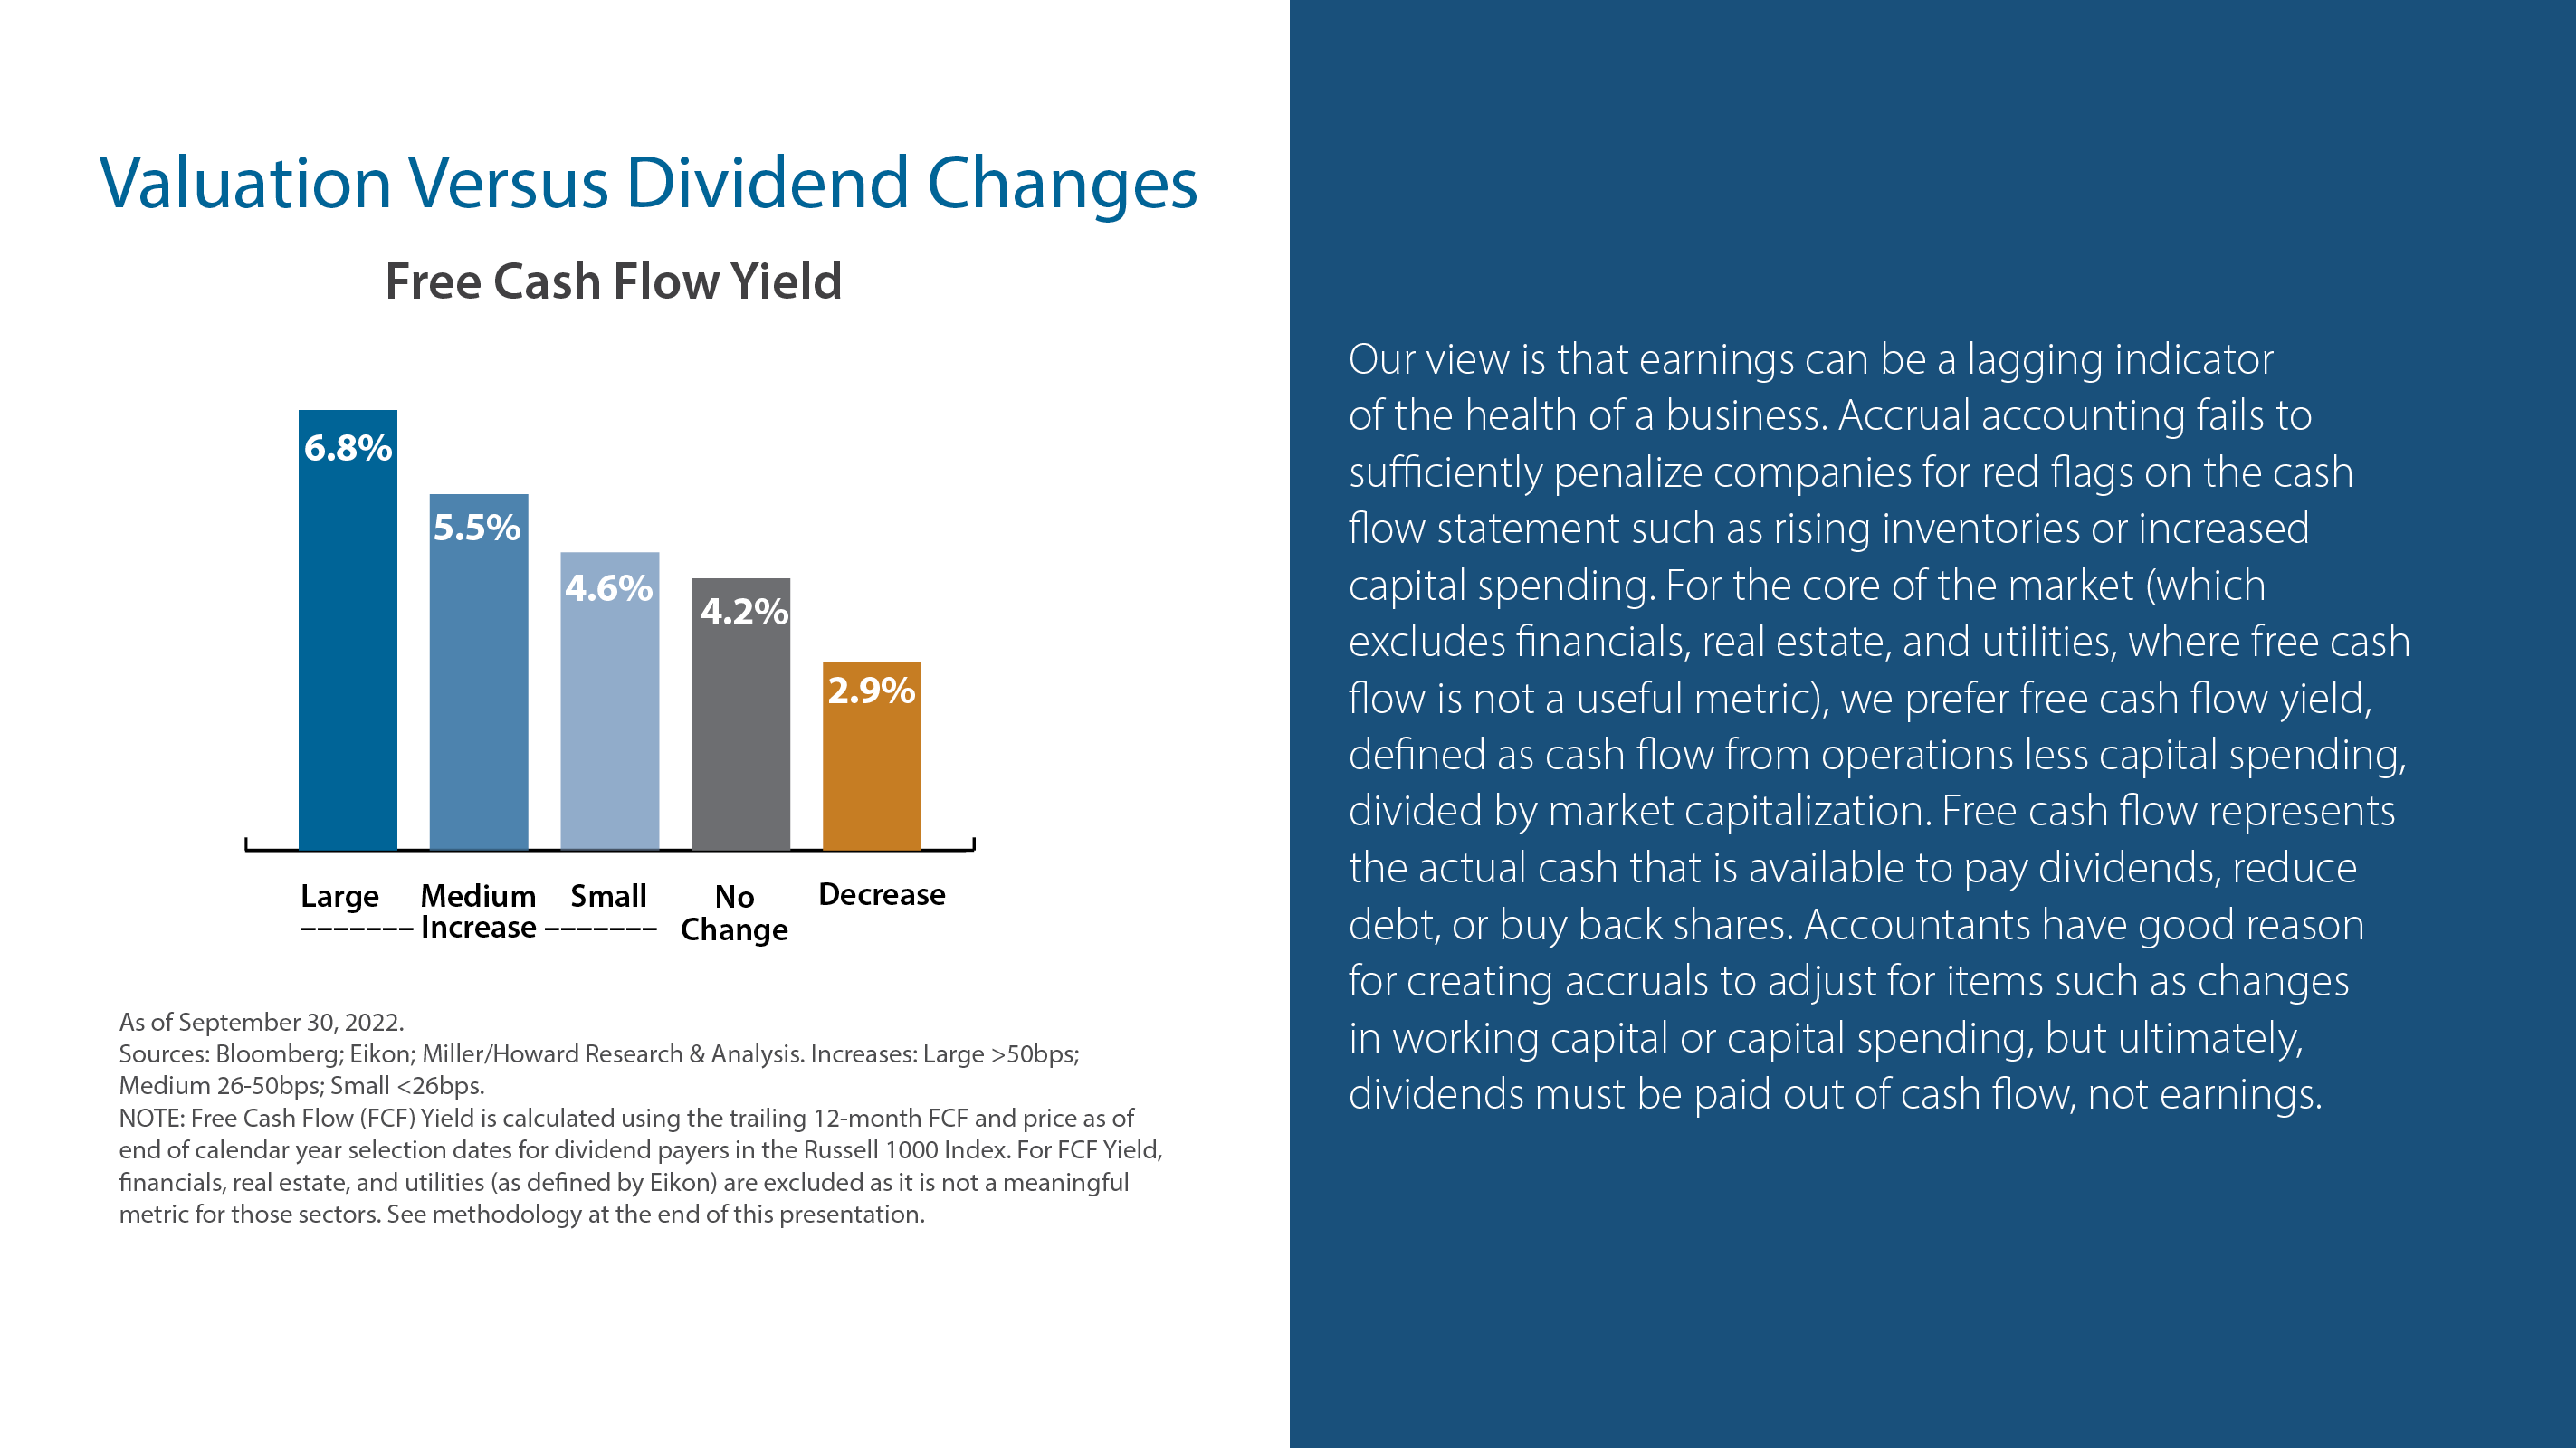 Valuation Versus Dividend Changes 2 - Free Cash Flow Yield